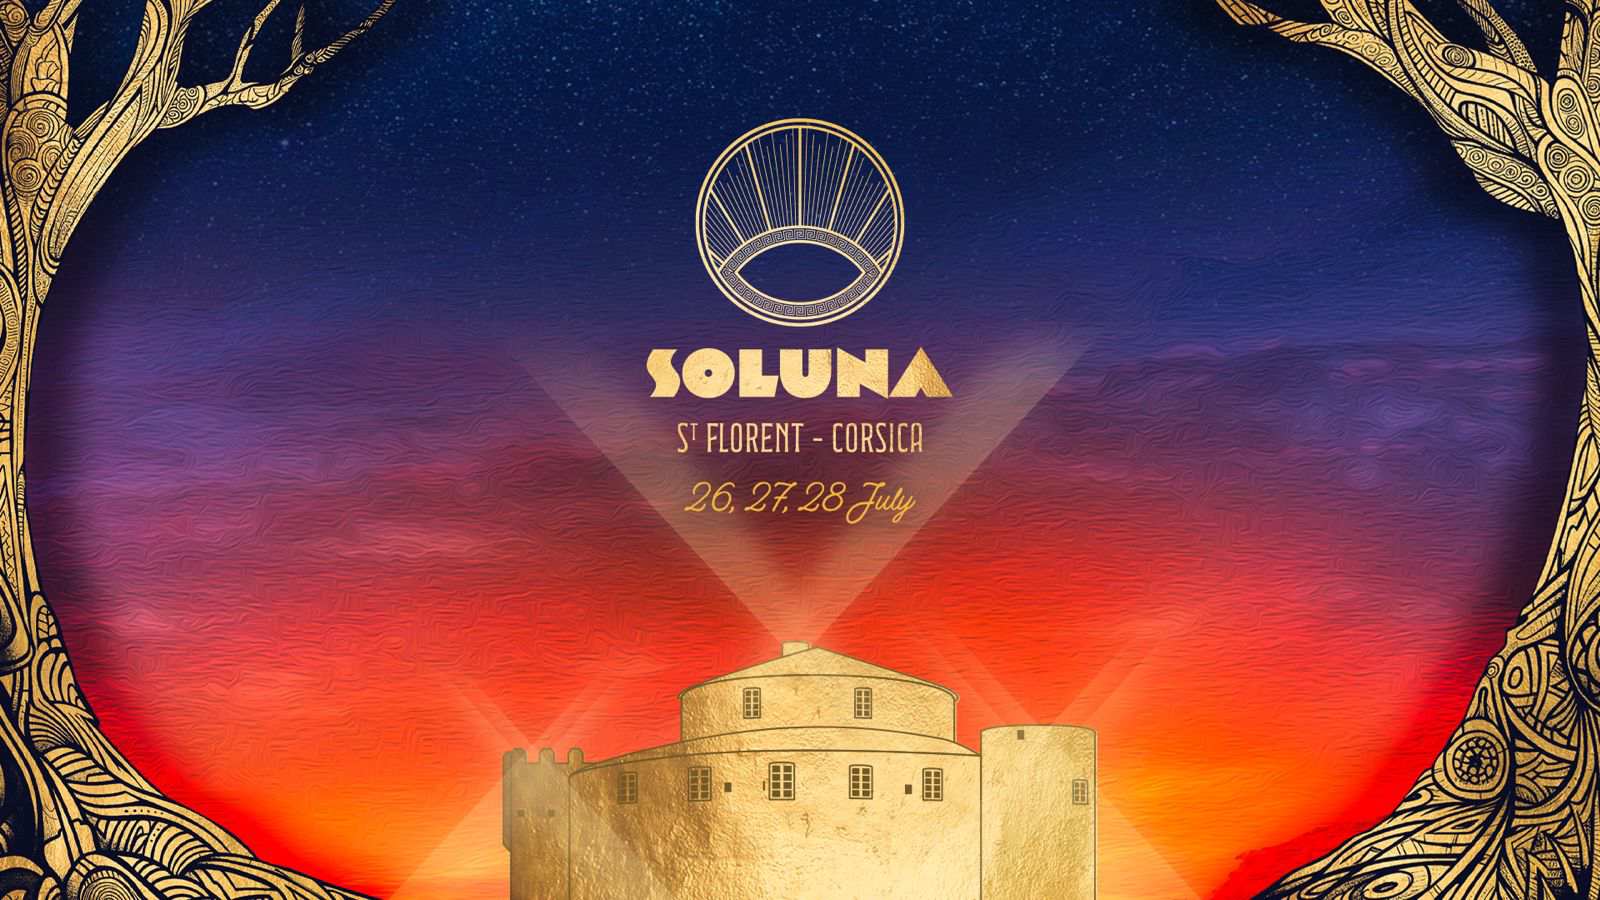 Soluna Festival